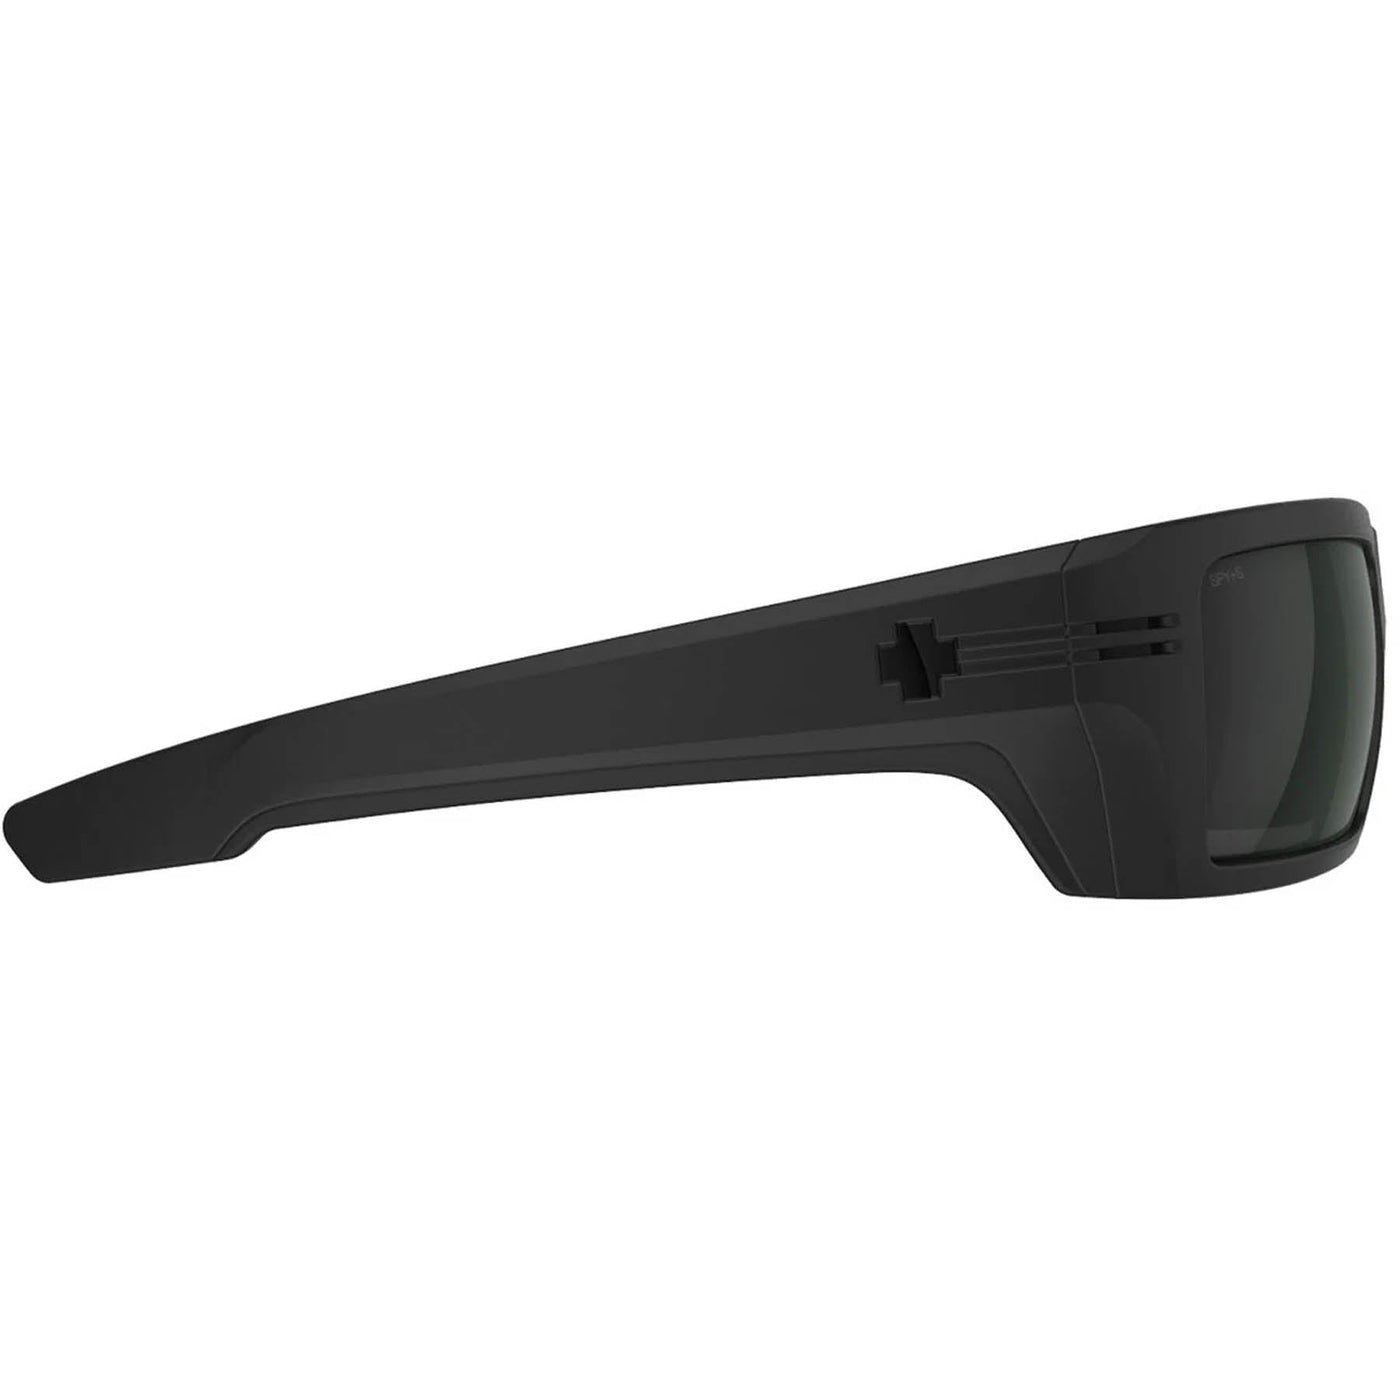 SPY REBAR SE ANSI Sunglasses, Happy Lens - Gray/Green 8Lines Shop - Fast Shipping